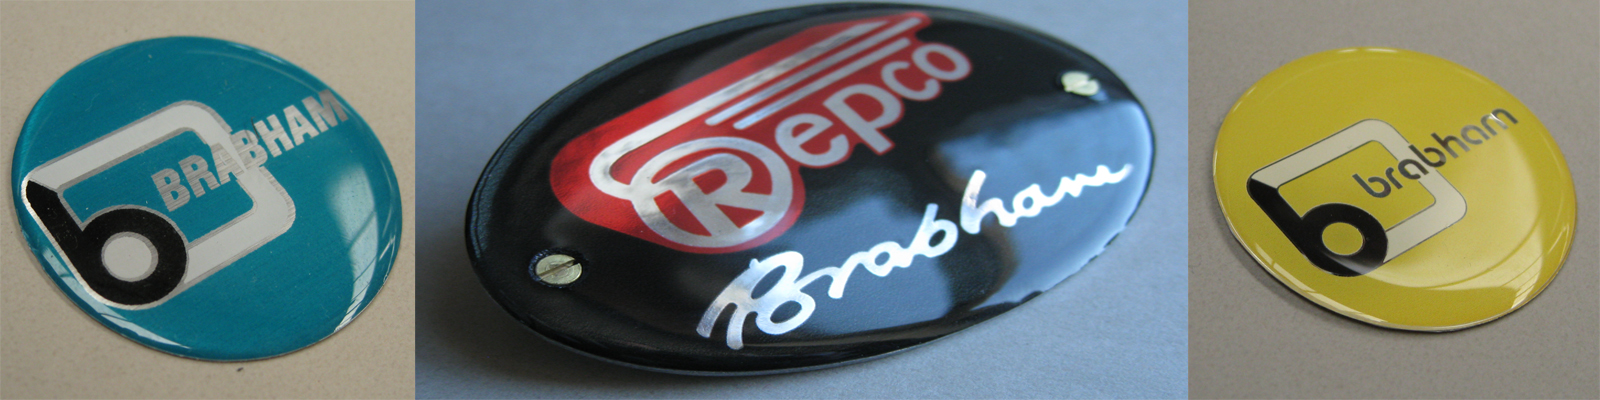 Brabham Badge Brabham Repco Badge